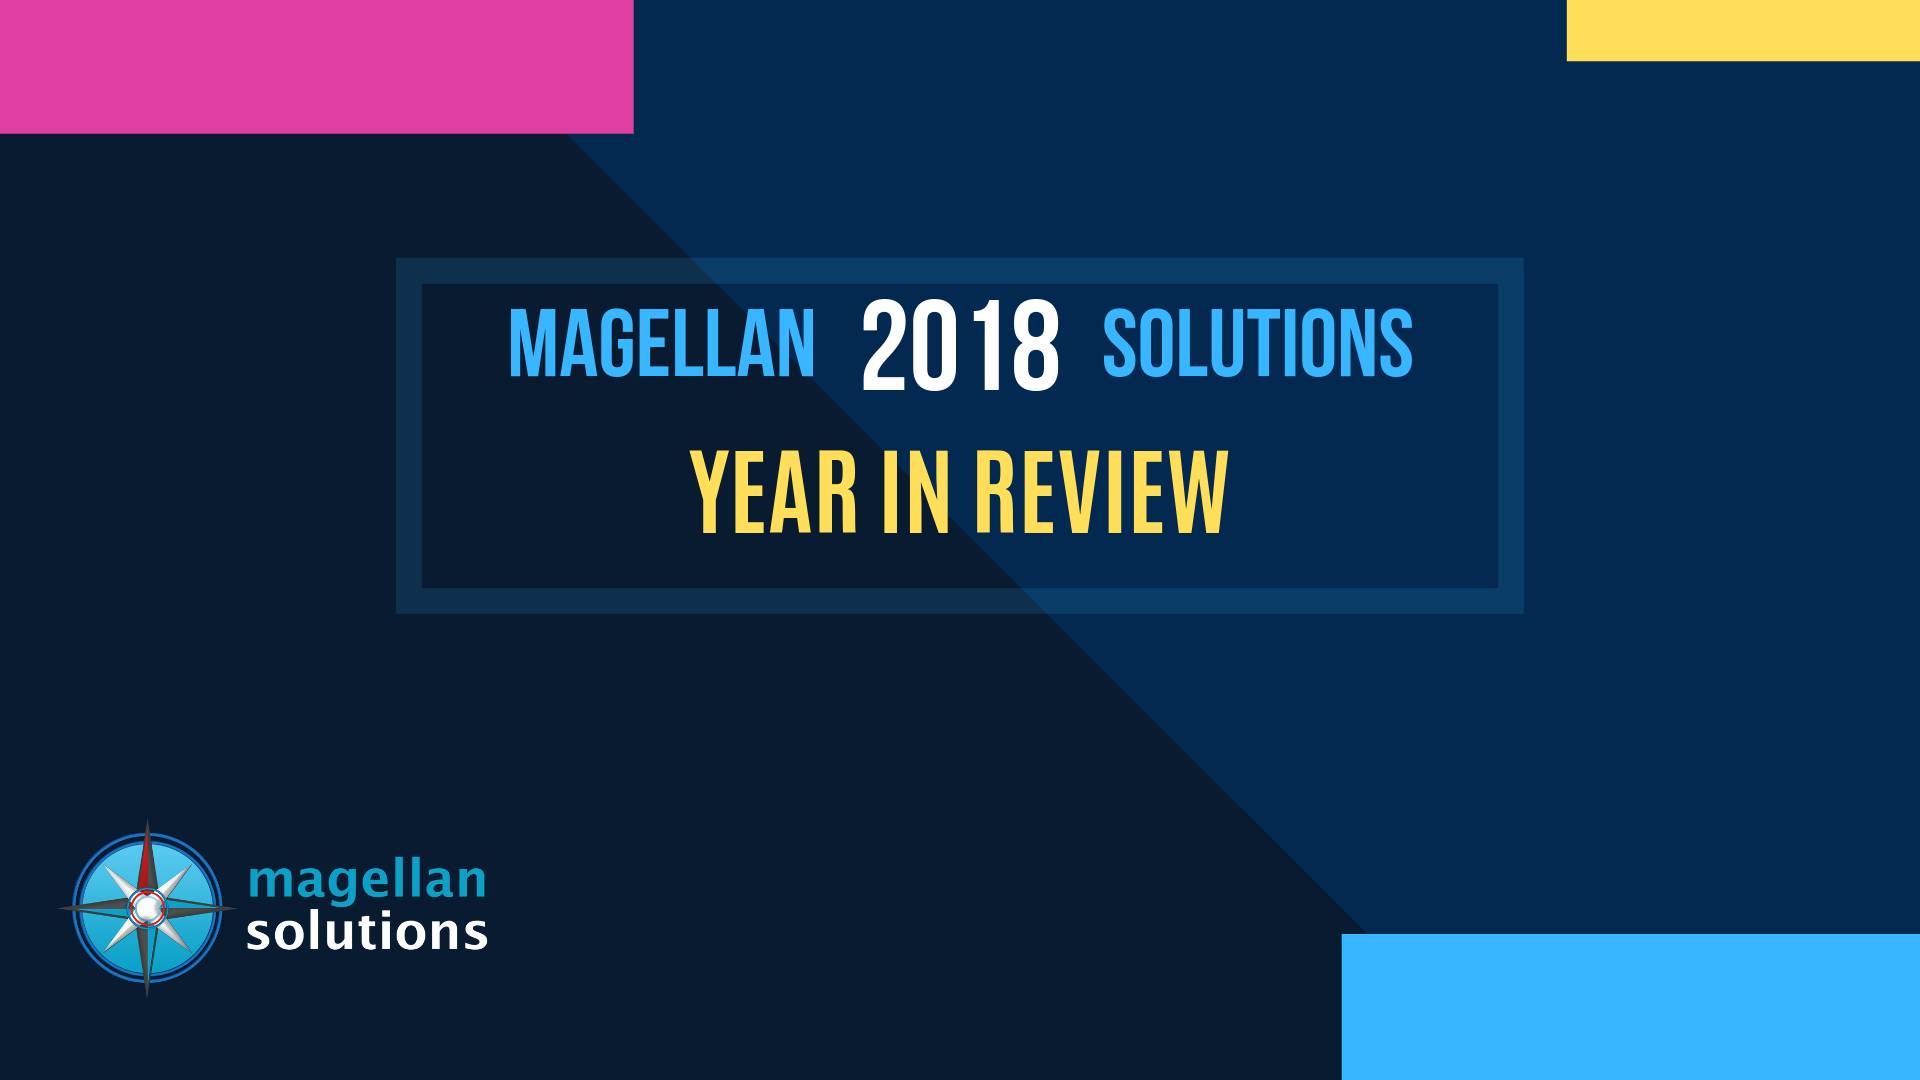 magellan solutions